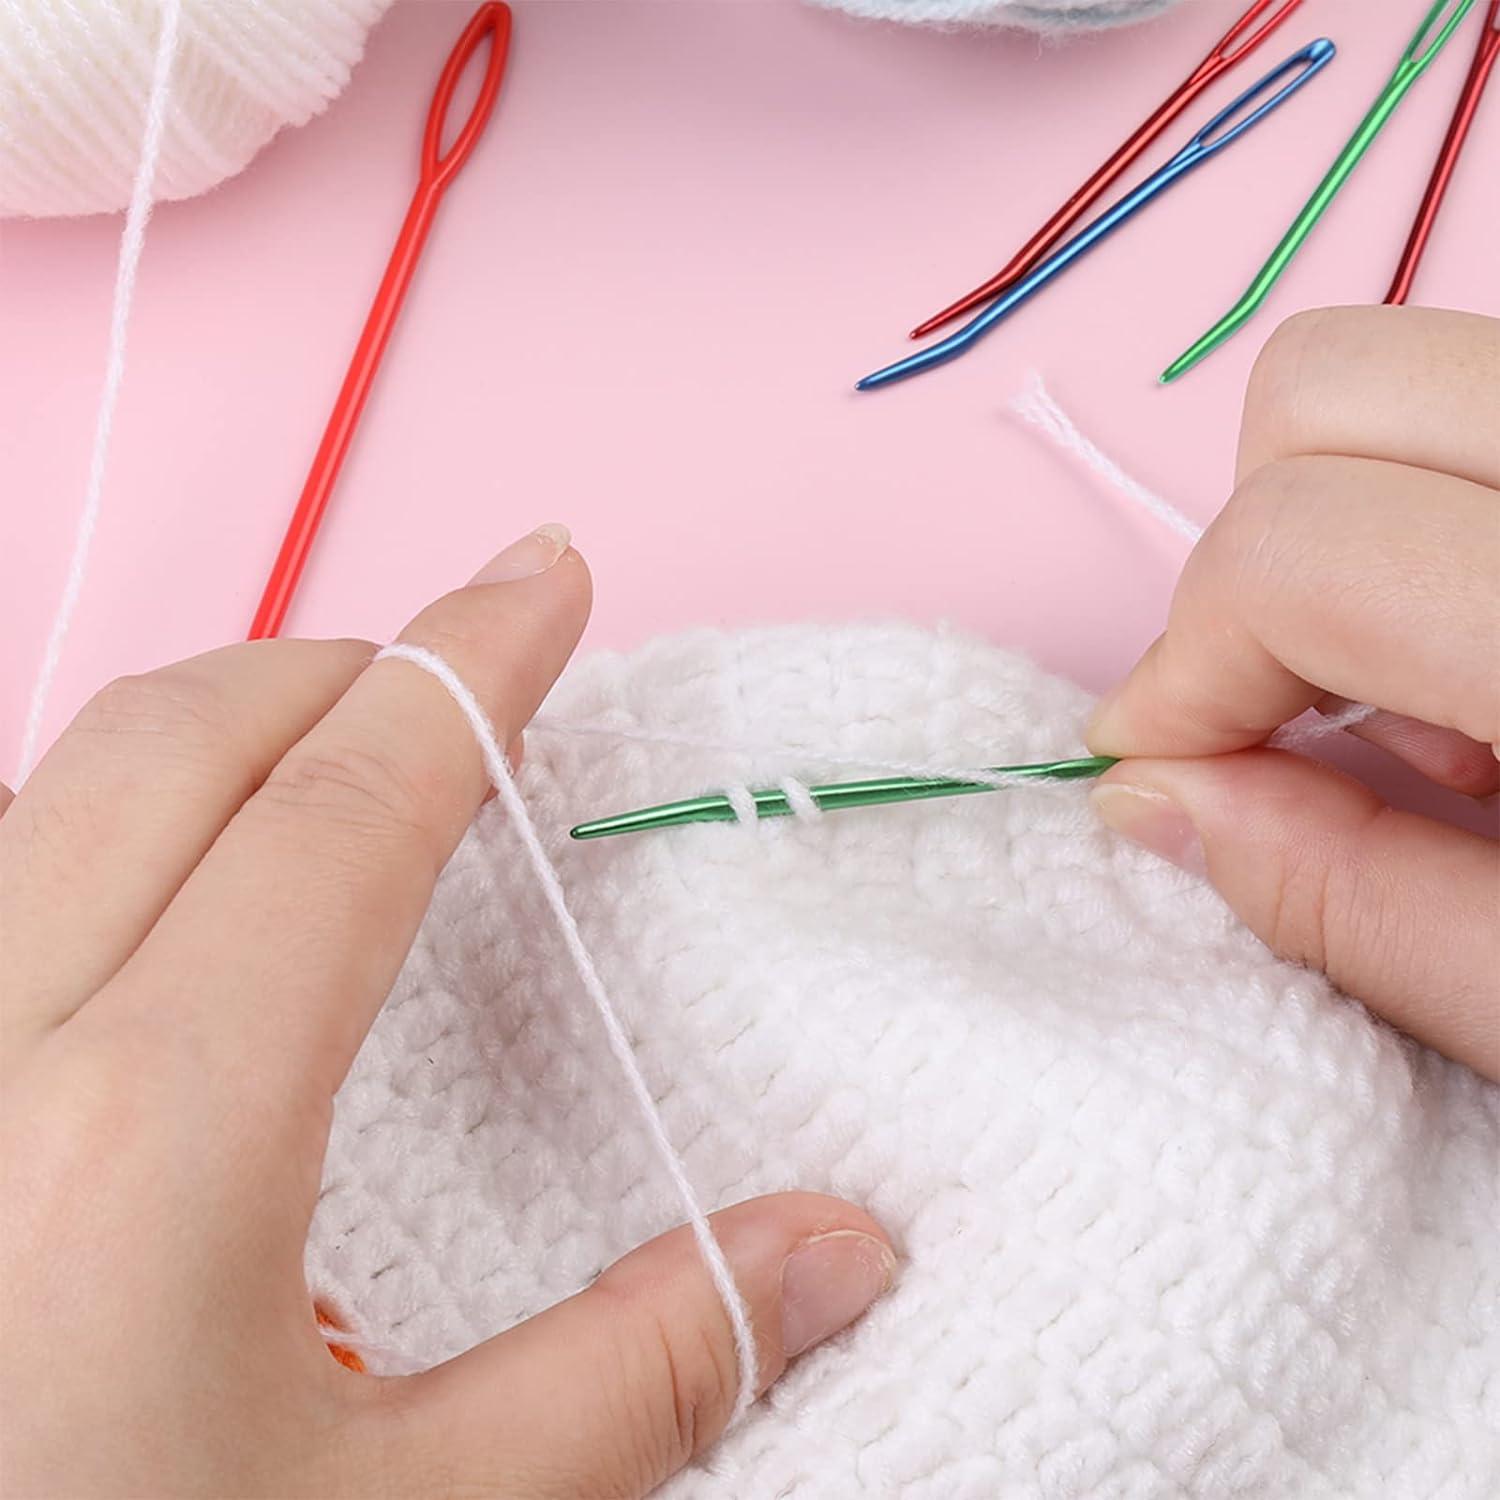 Sewing Needles : Knitting & Crochet